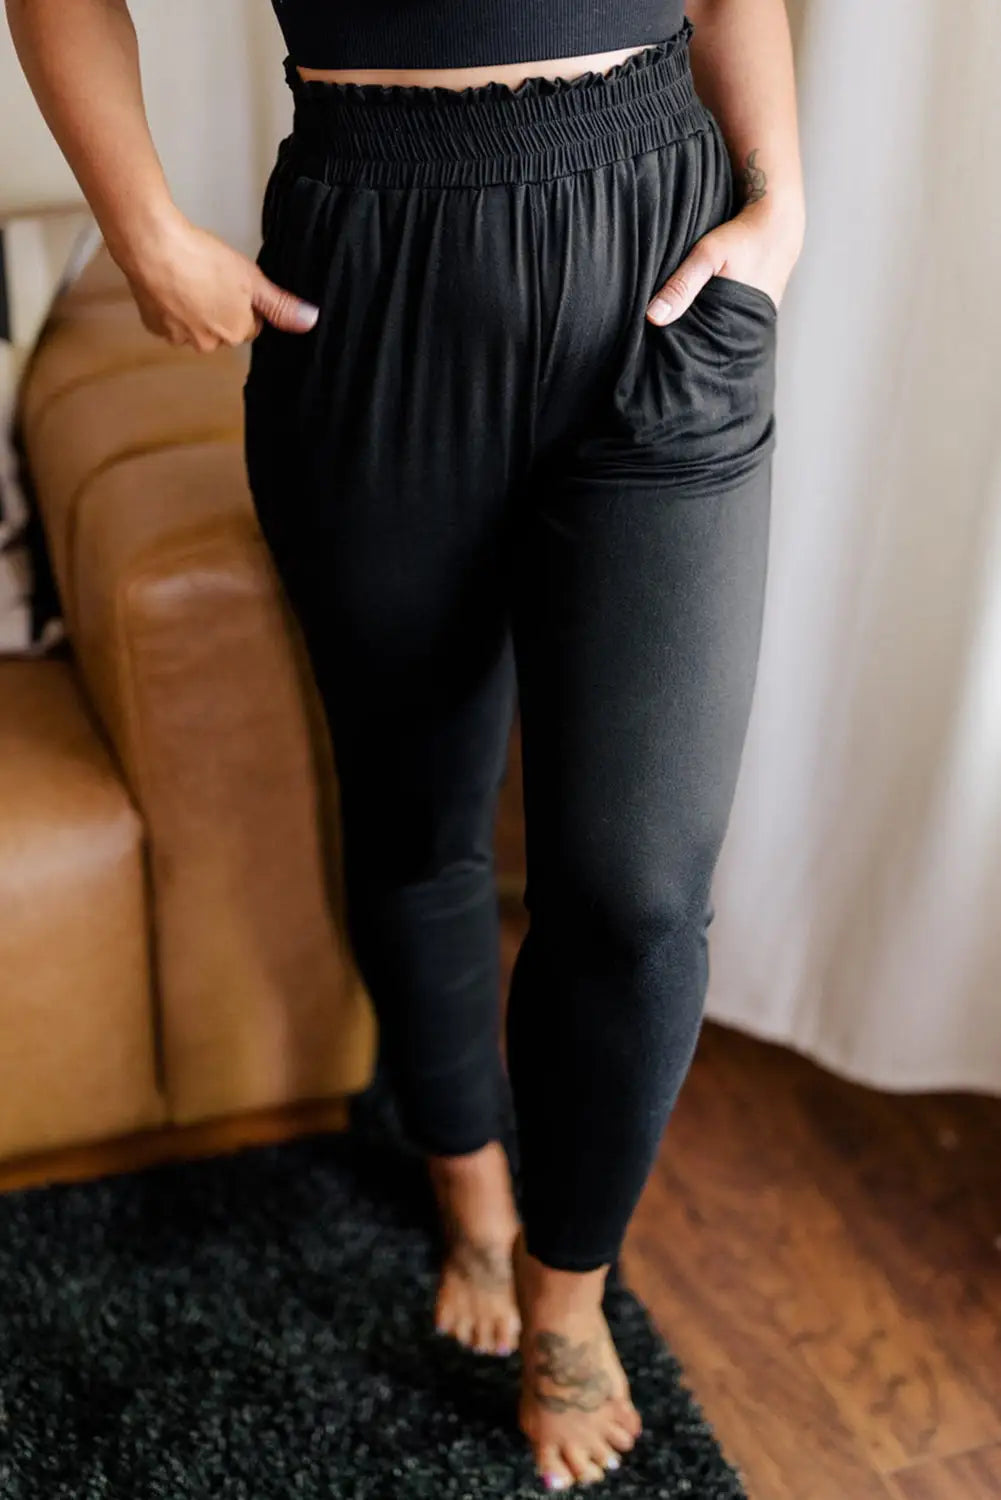 Black plus size frill high waist pocketed soft pants - 1x 90% polyester + 10% elastane